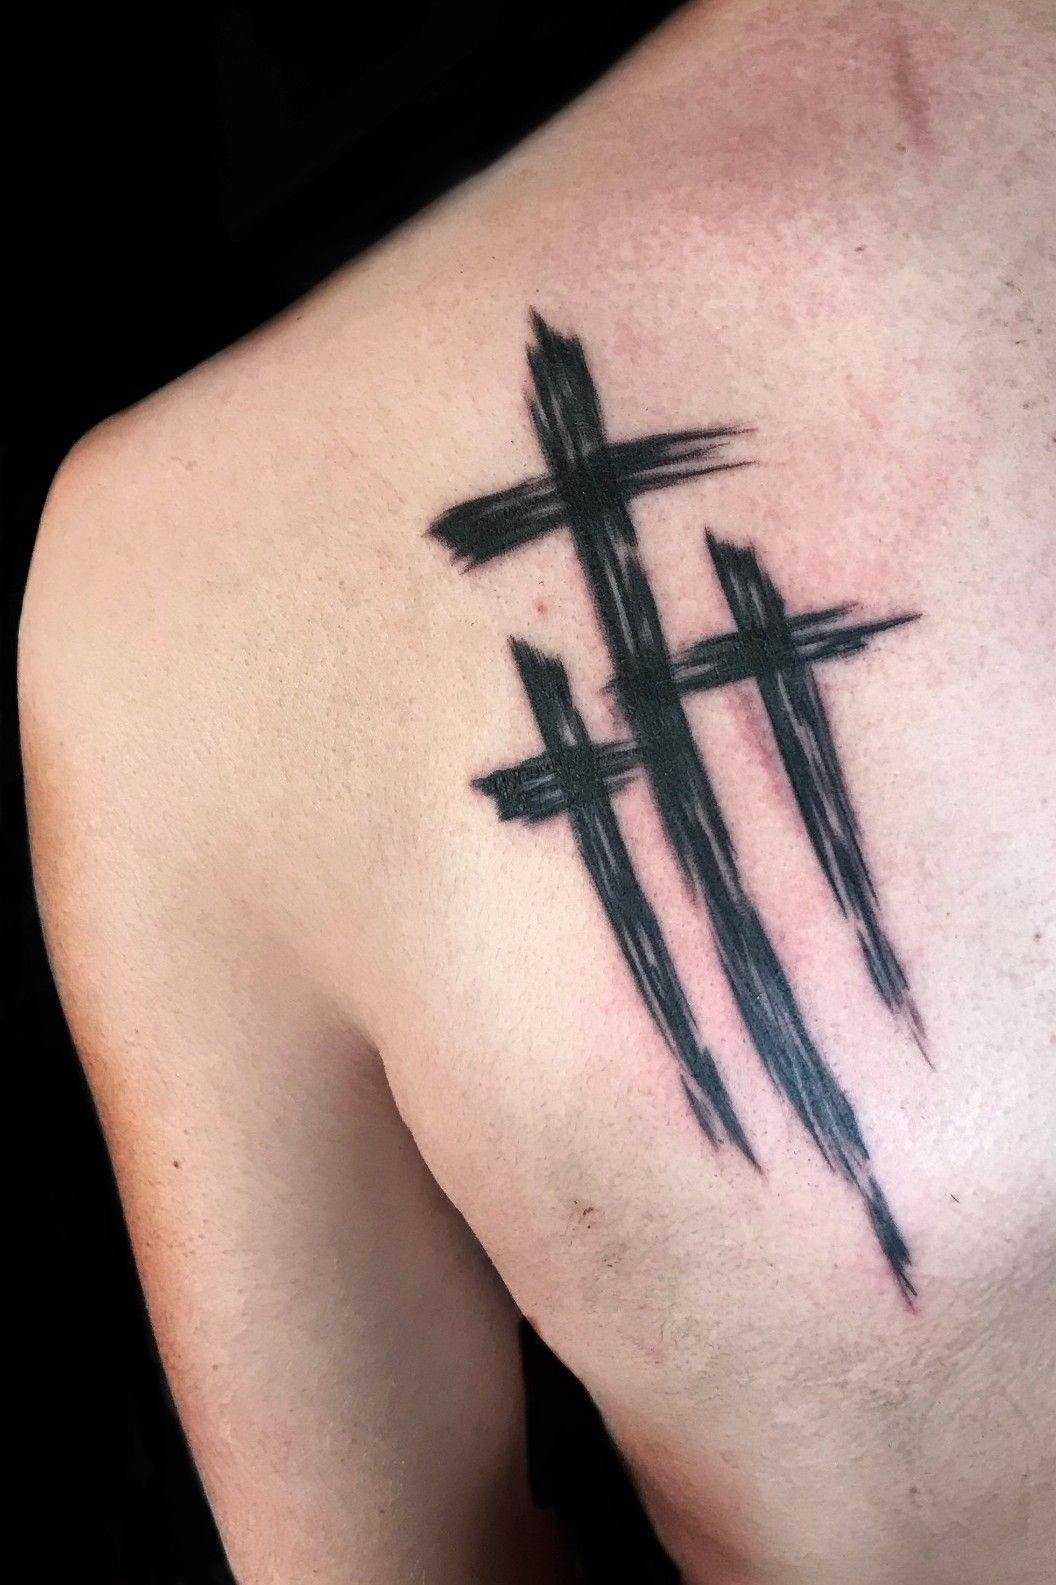 50 3D Cross Tattoo Designs For Men  Jesus Ink Ideas